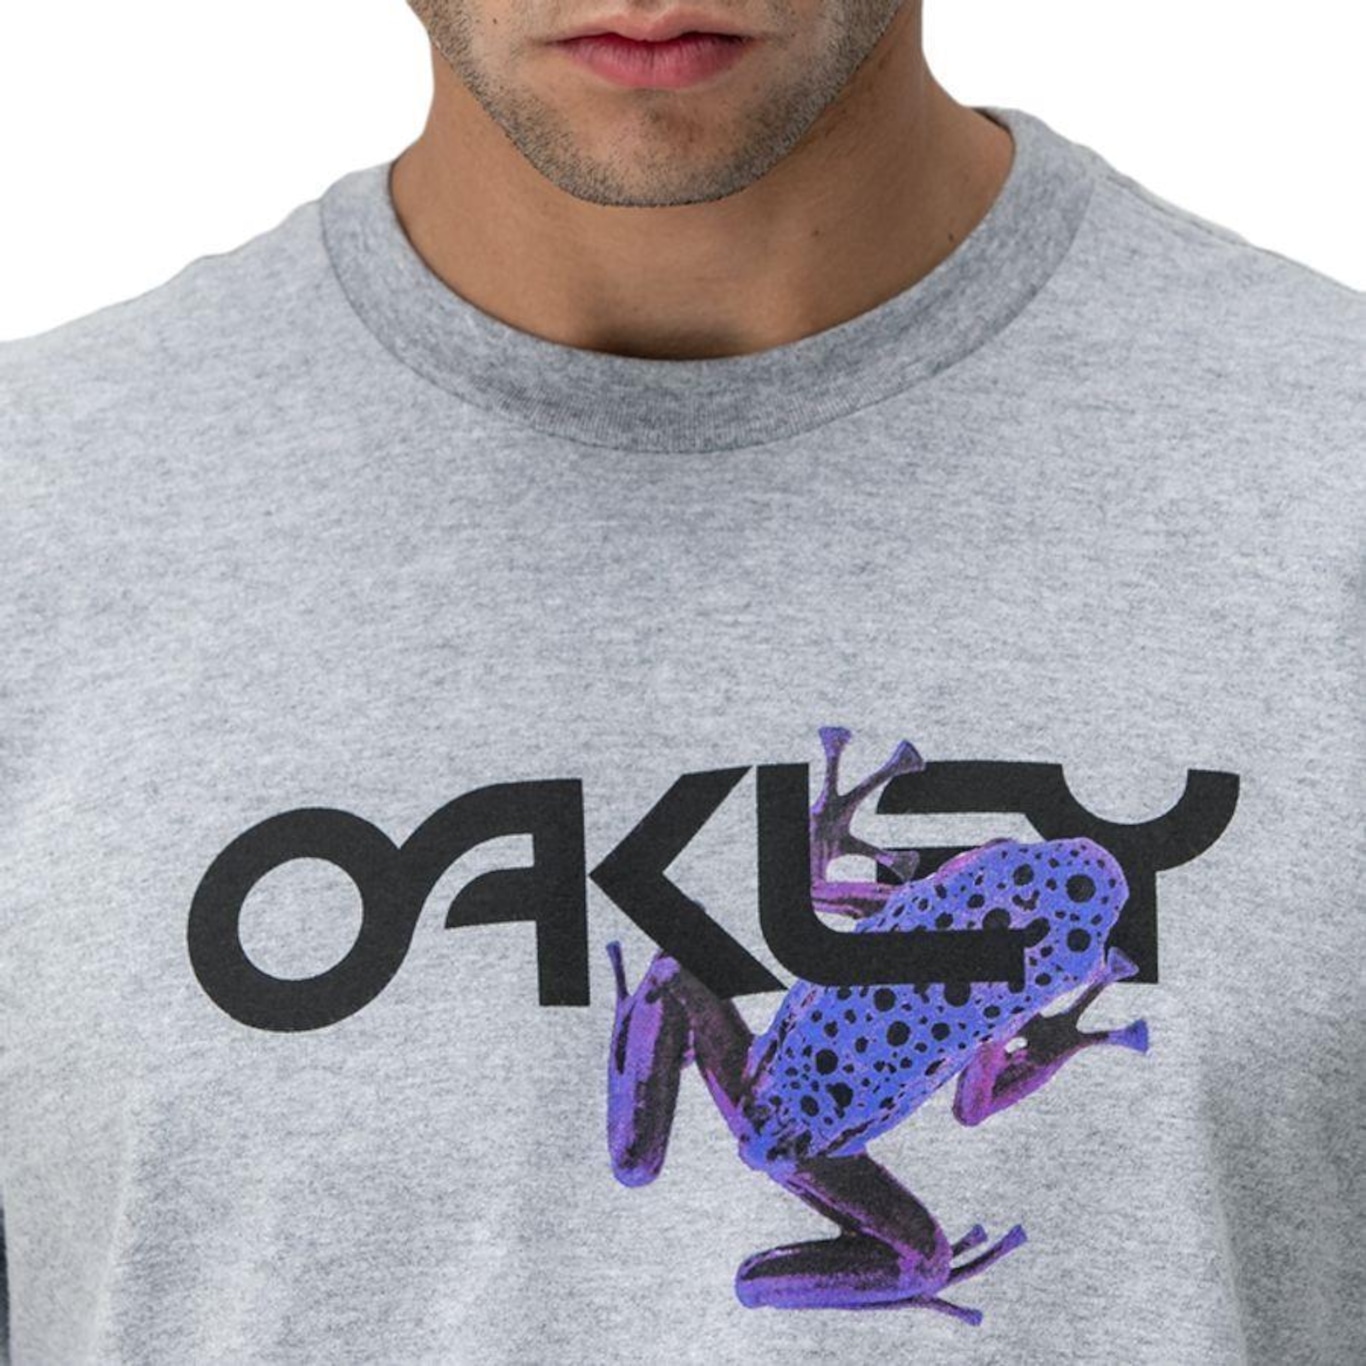 Camiseta Oakley Frog Big Graphic Tee - Masculina